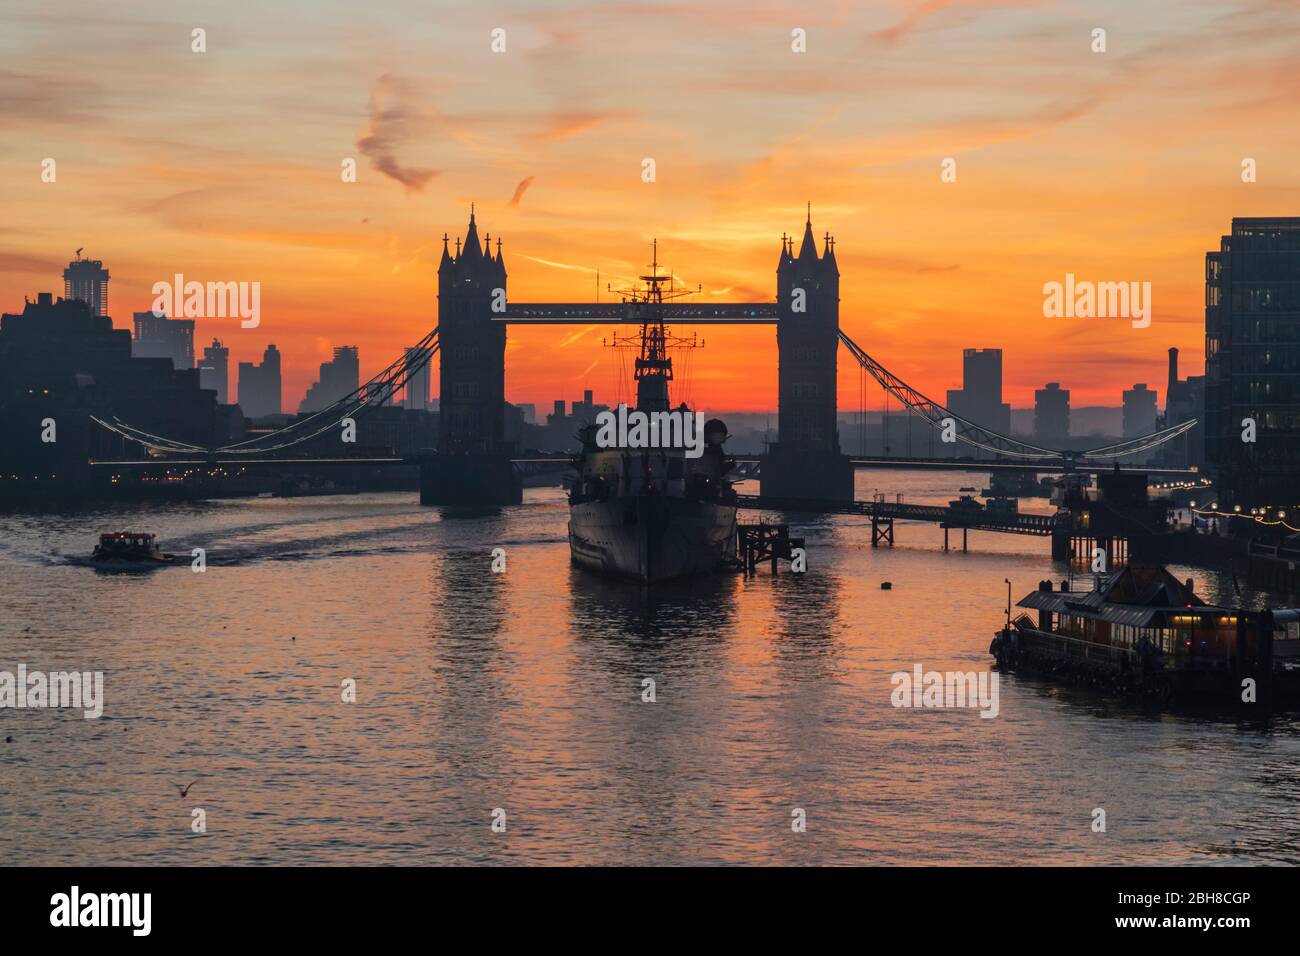 England, London, Tower Bridge and Museum Ship HMS Belfast at Dawn Stock Photo